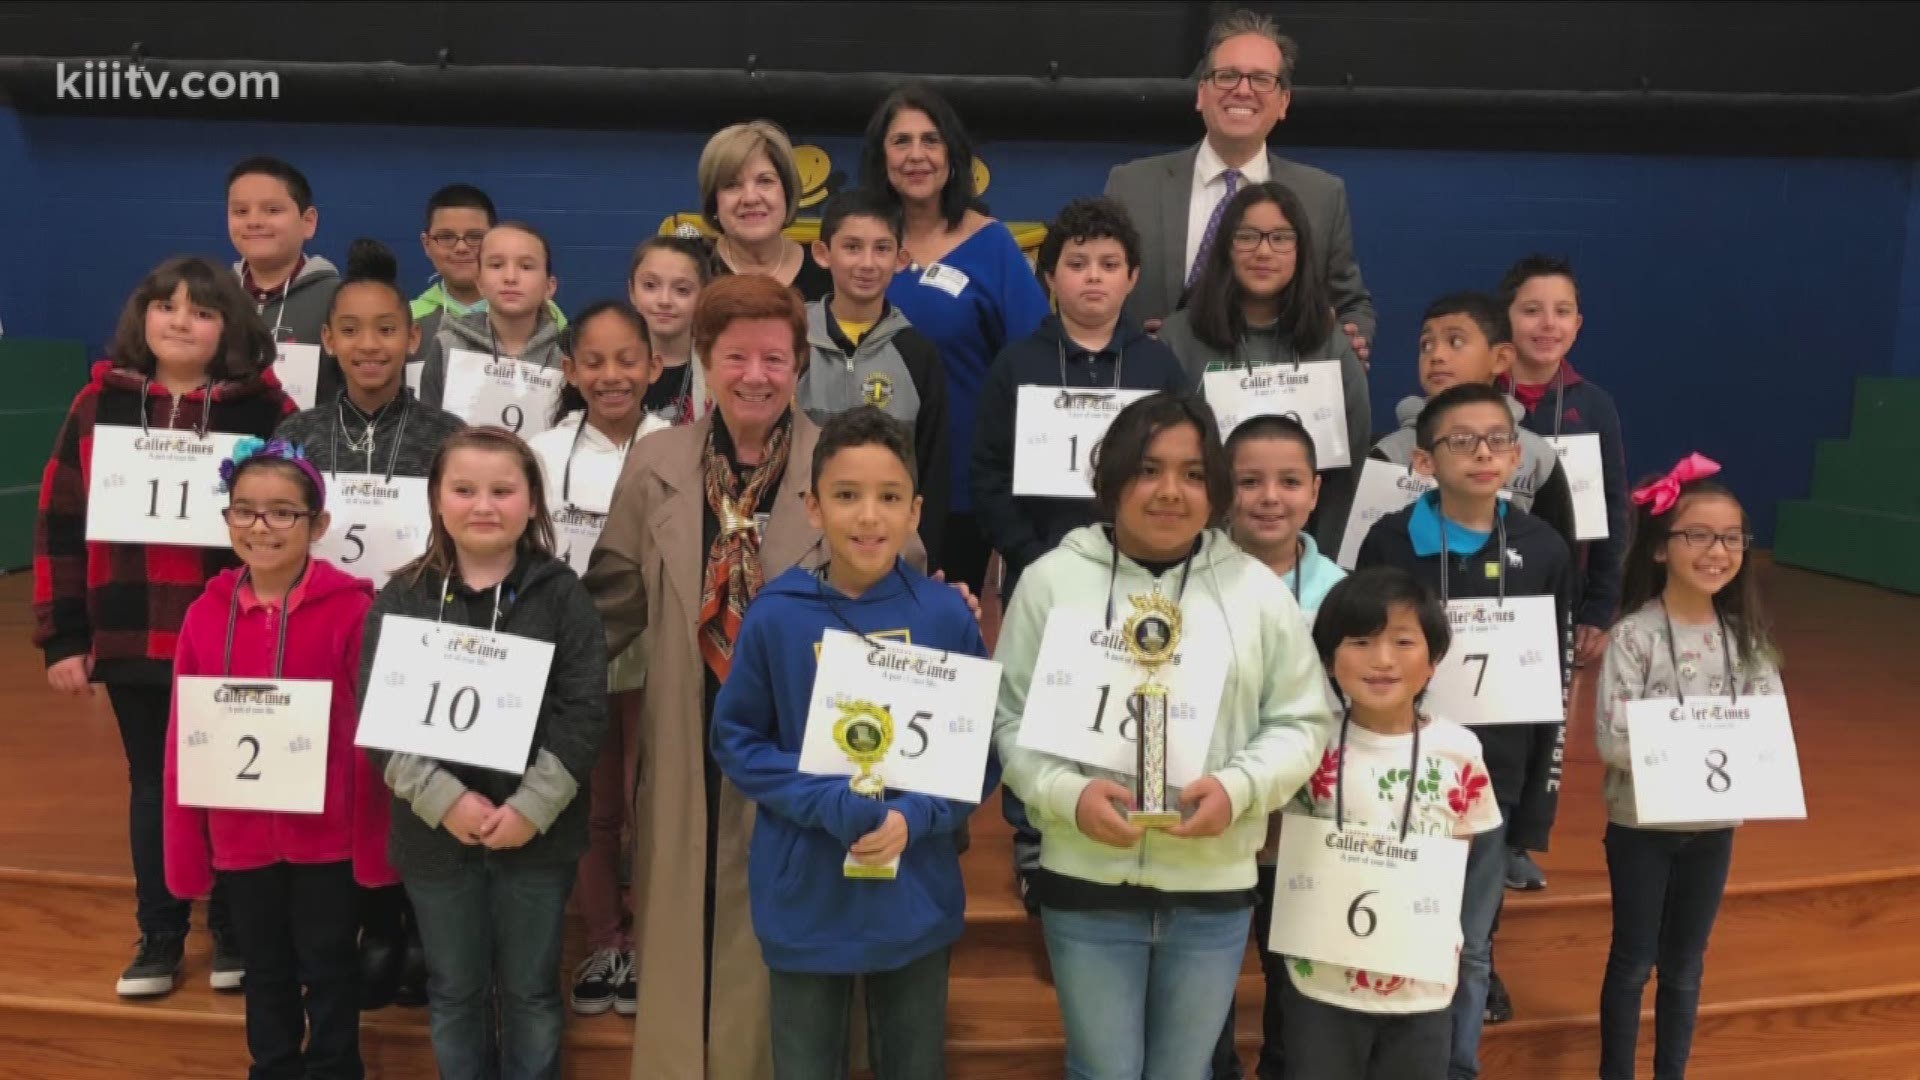 It's Spelling Bee season across the Coastal Bend, and on Wednesday Kiii News Anchor John-Thomas Kobos took part in judging at Mary Helen Berlanga Elementary School.